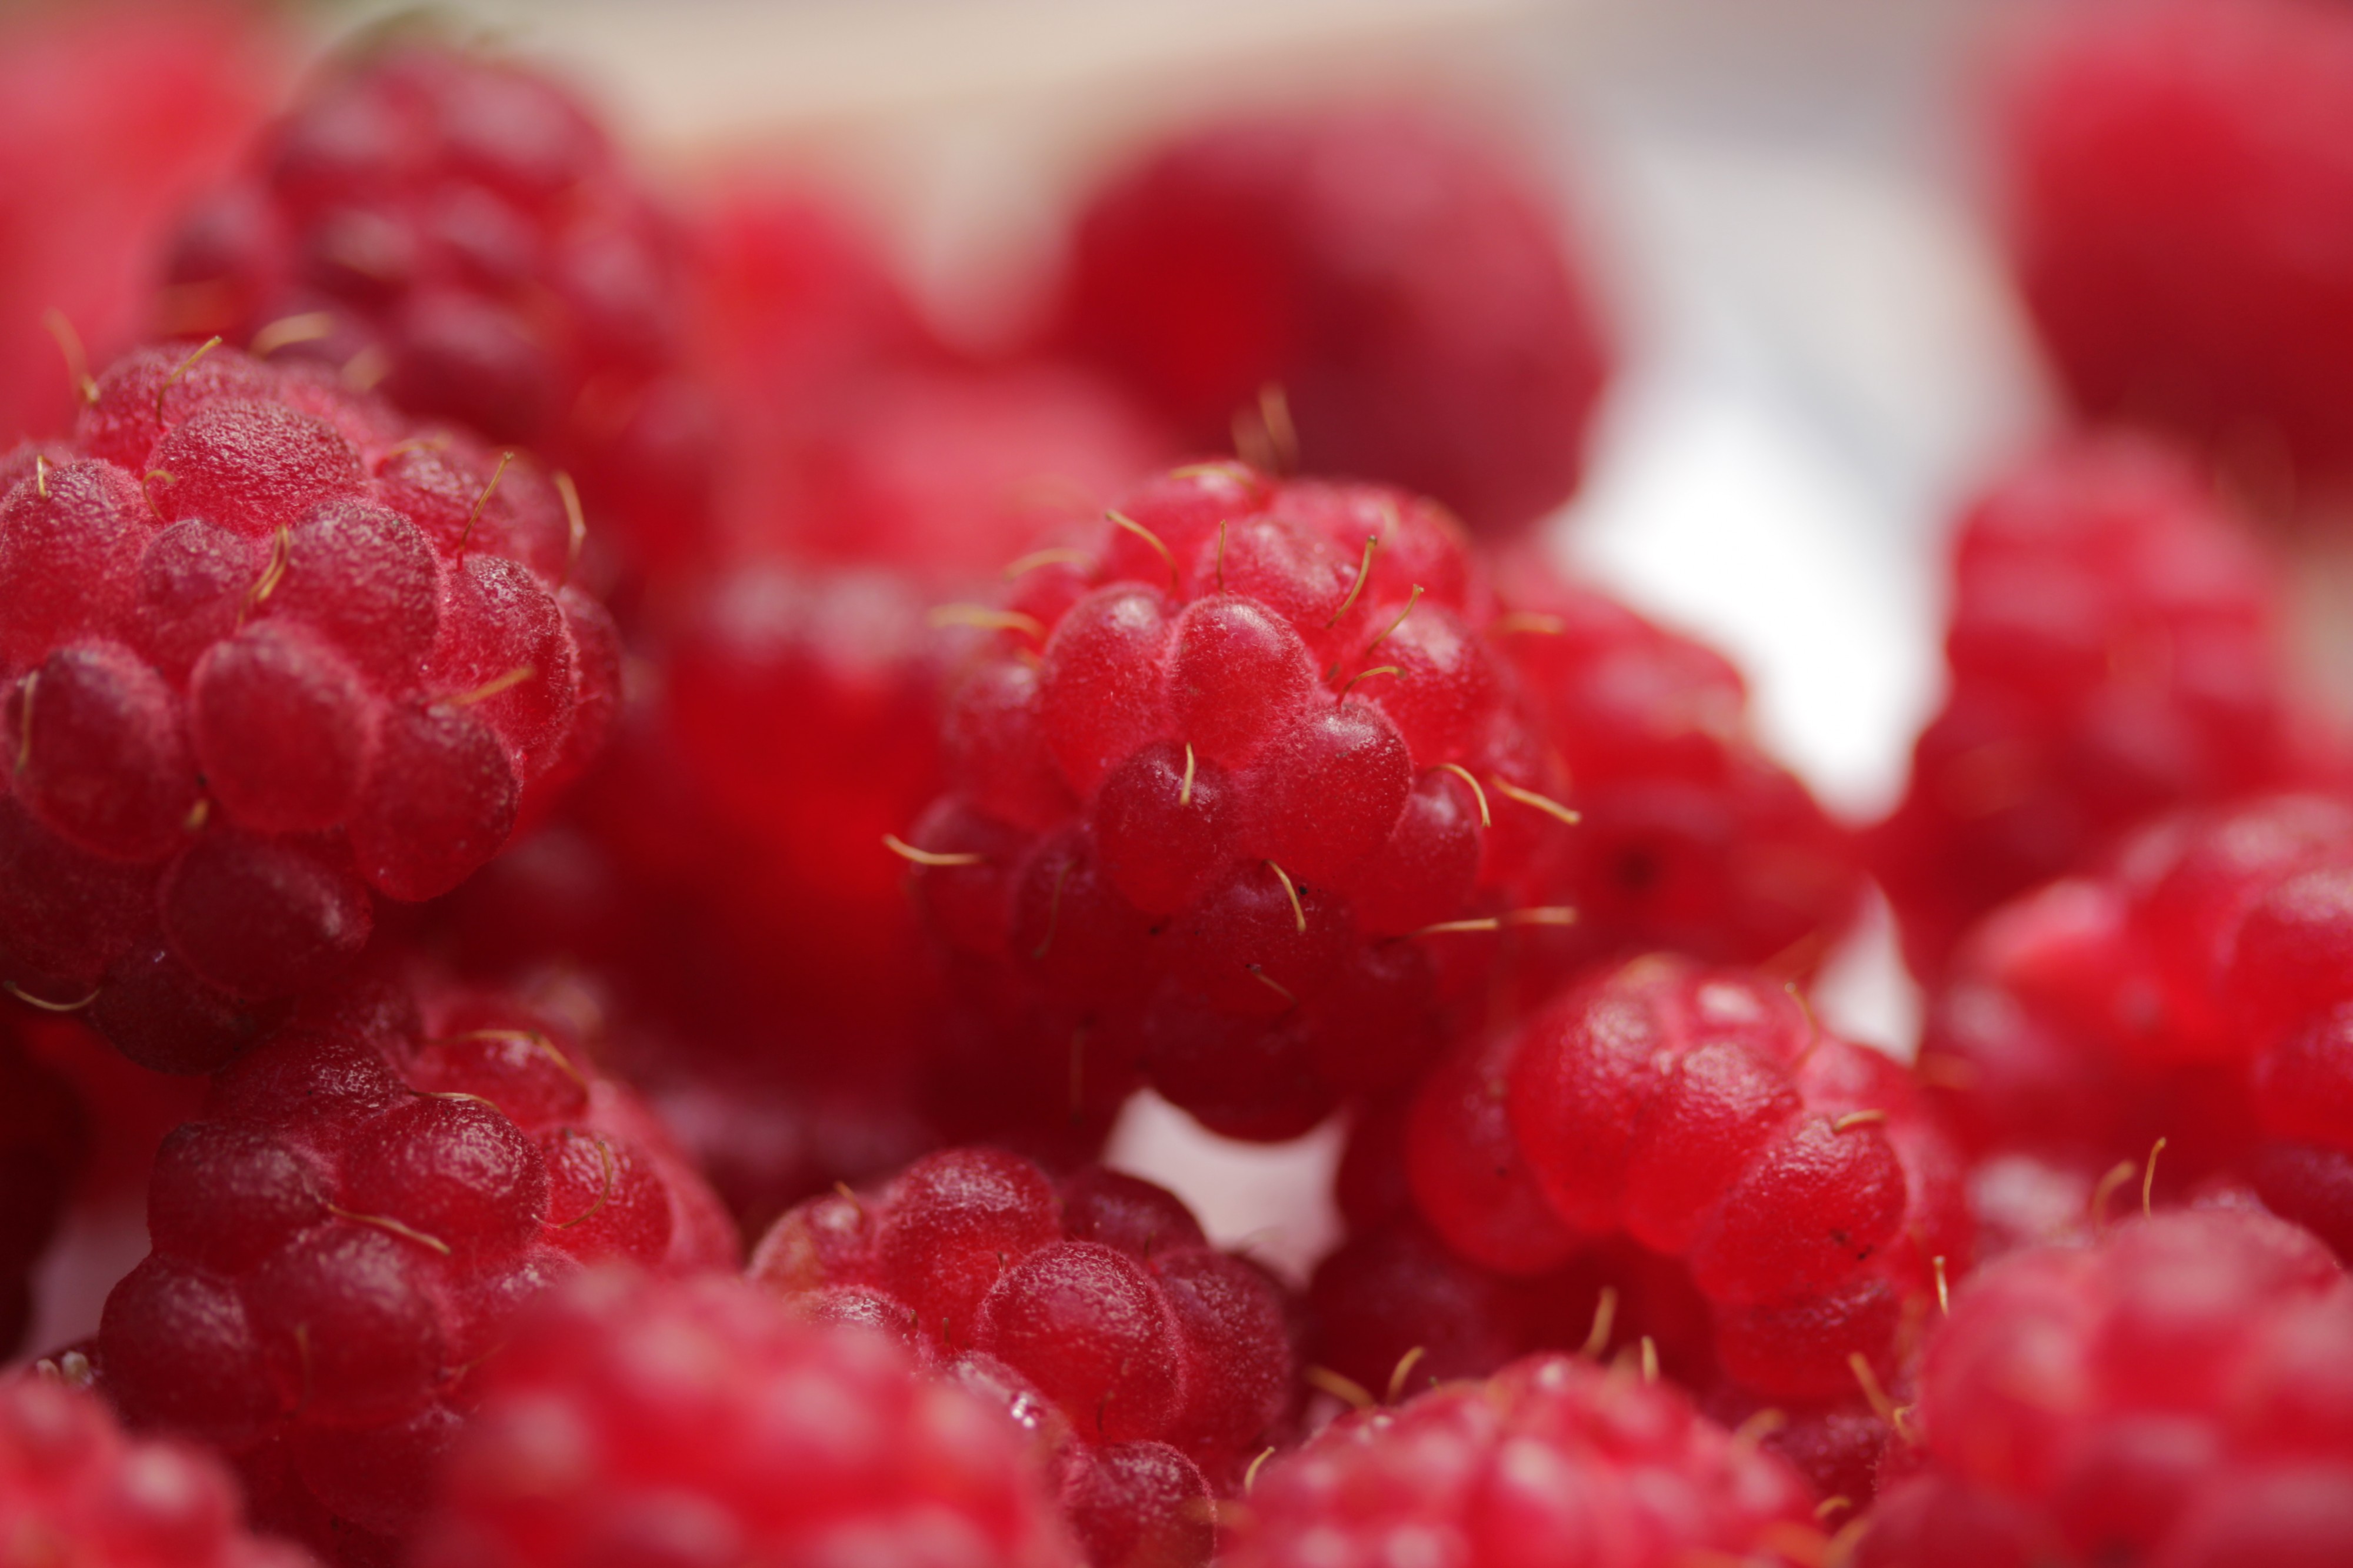 Red Raspberry - Rubus idaeus (36436657596)